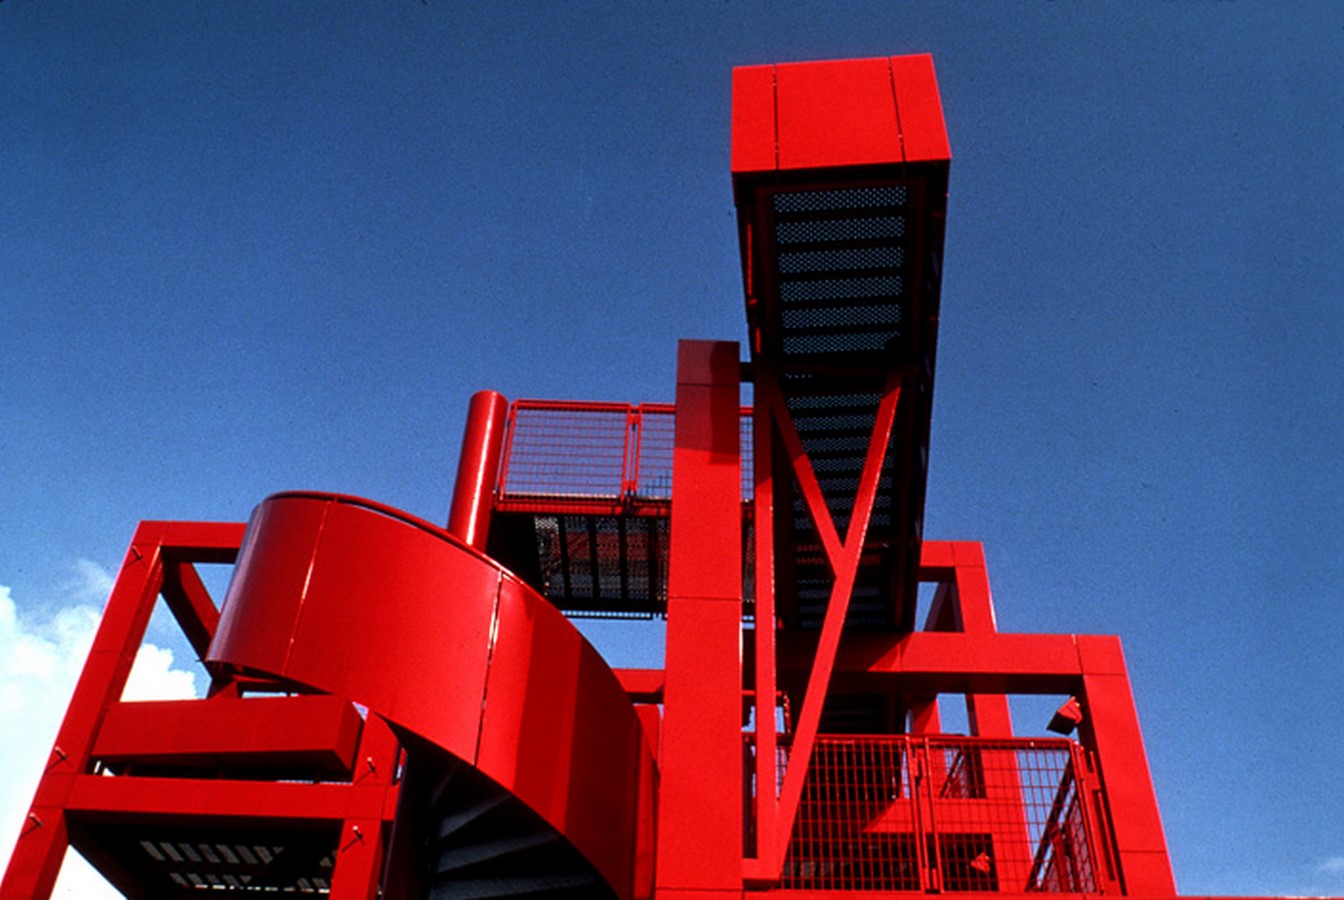 Parc De La Villette by Bernard Tschumi Architects: Constant Reconfiguration and Discovery - Sheet1